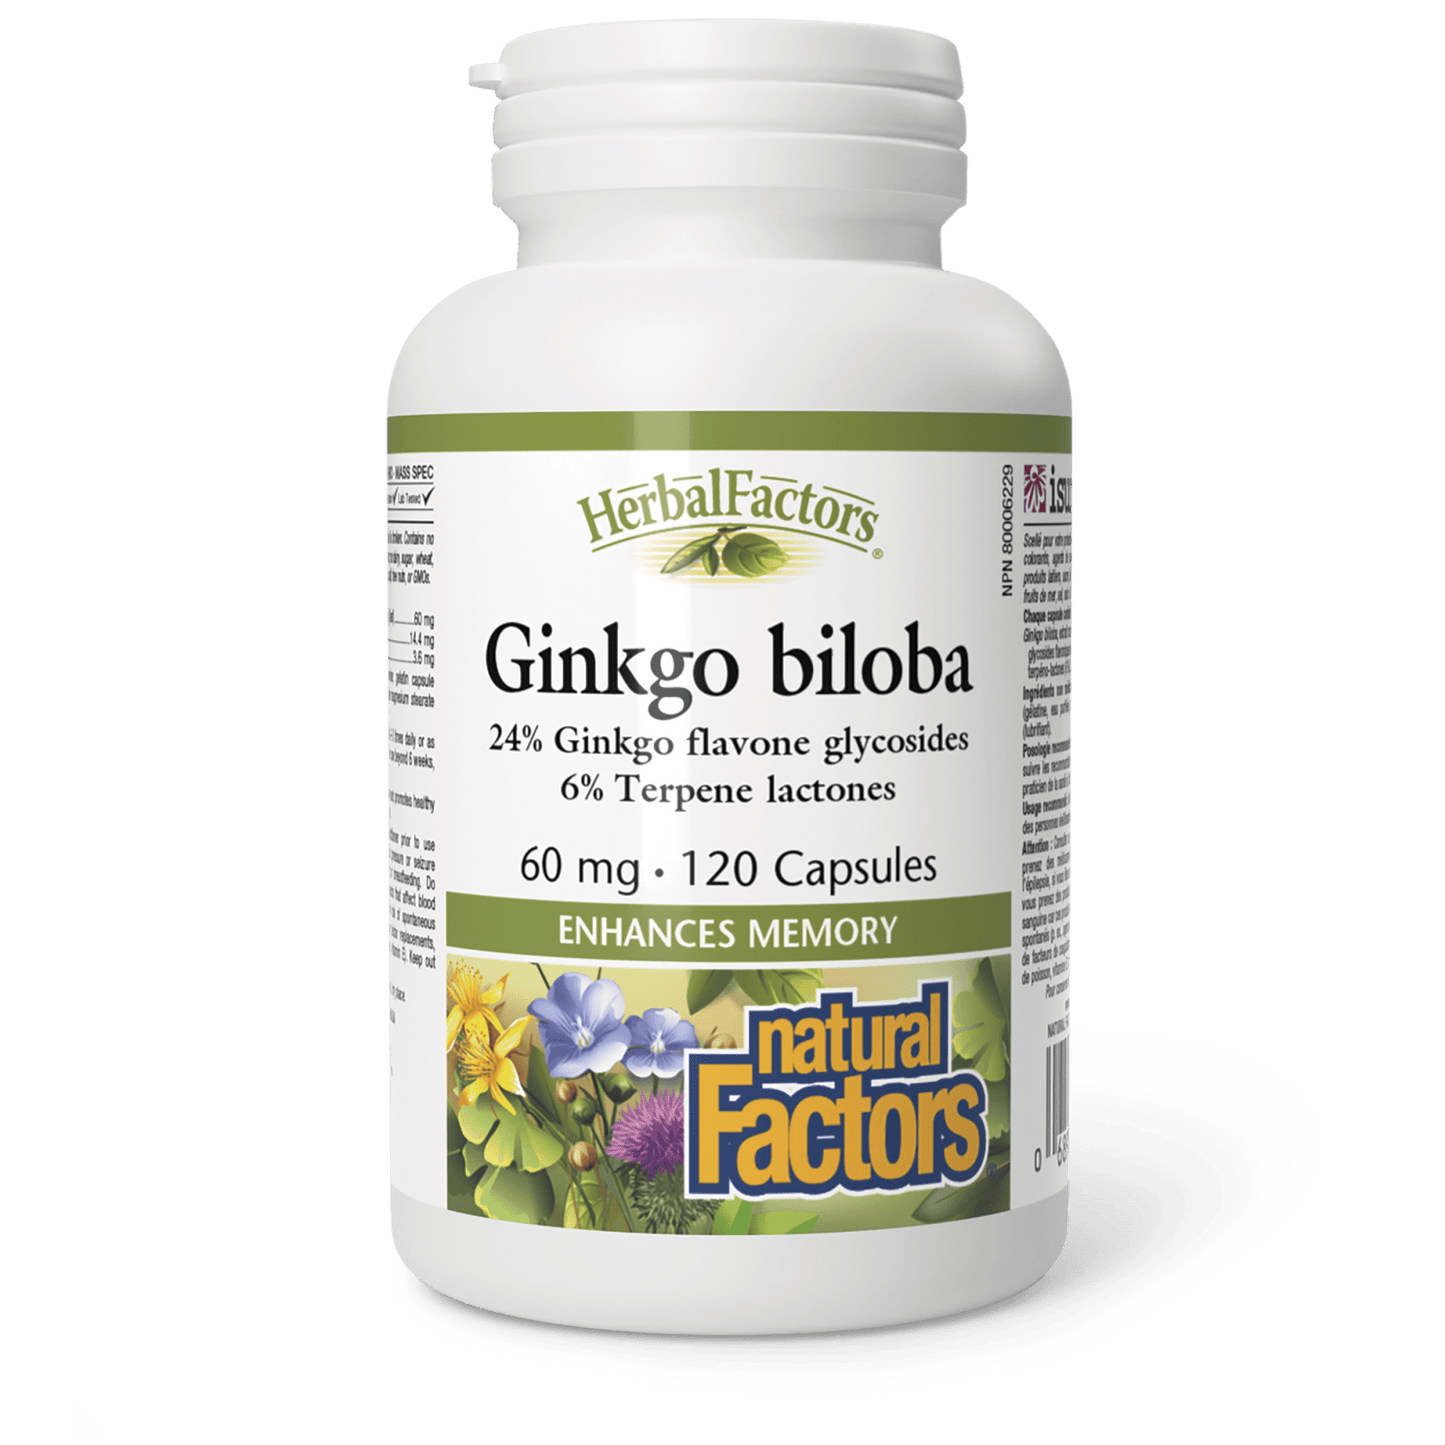 Ginkgo biloba 60 mg, HerbalFactors, Natural Factors|v|image|4533